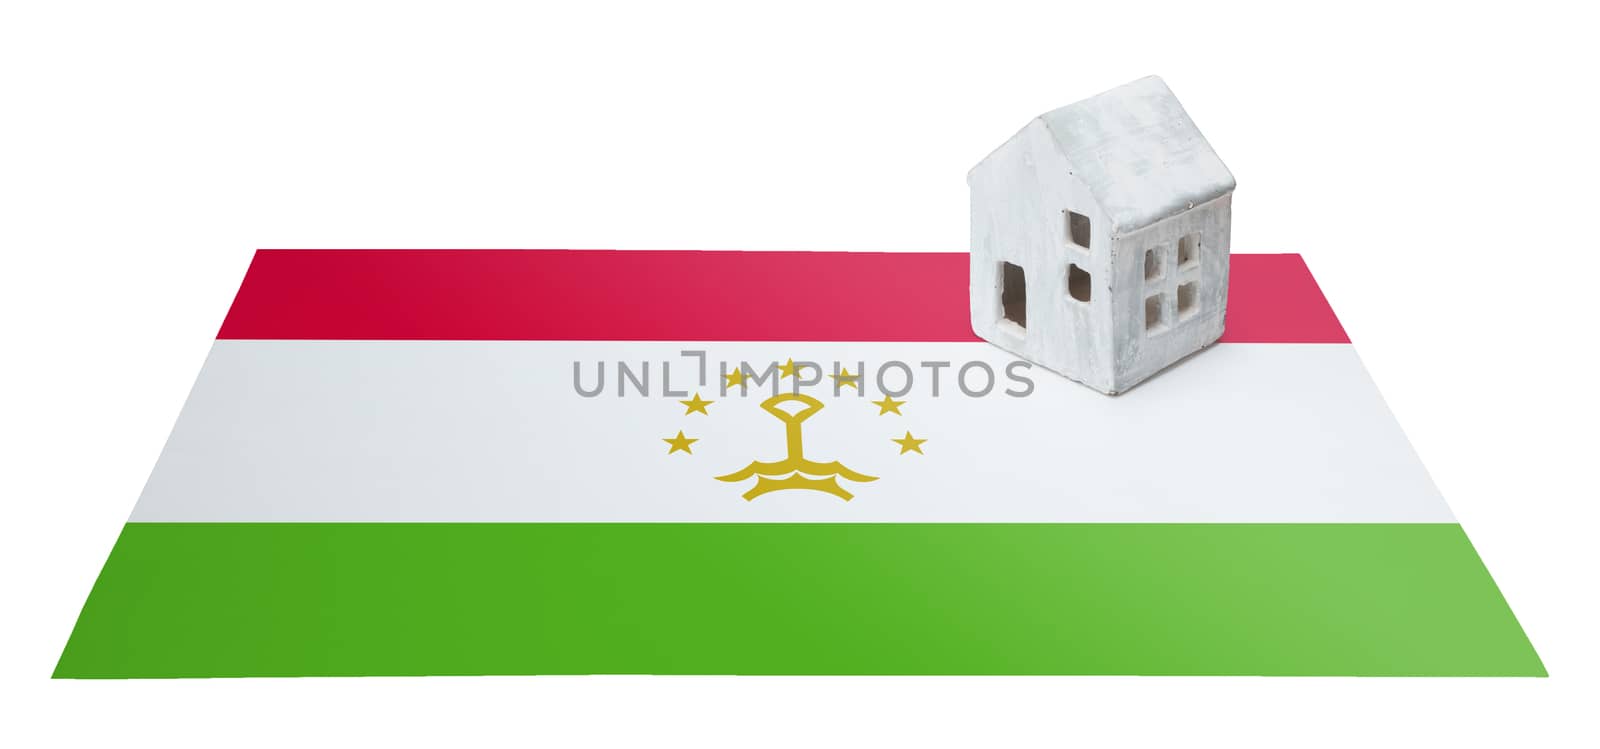 Small house on a flag - Tajikistan by michaklootwijk